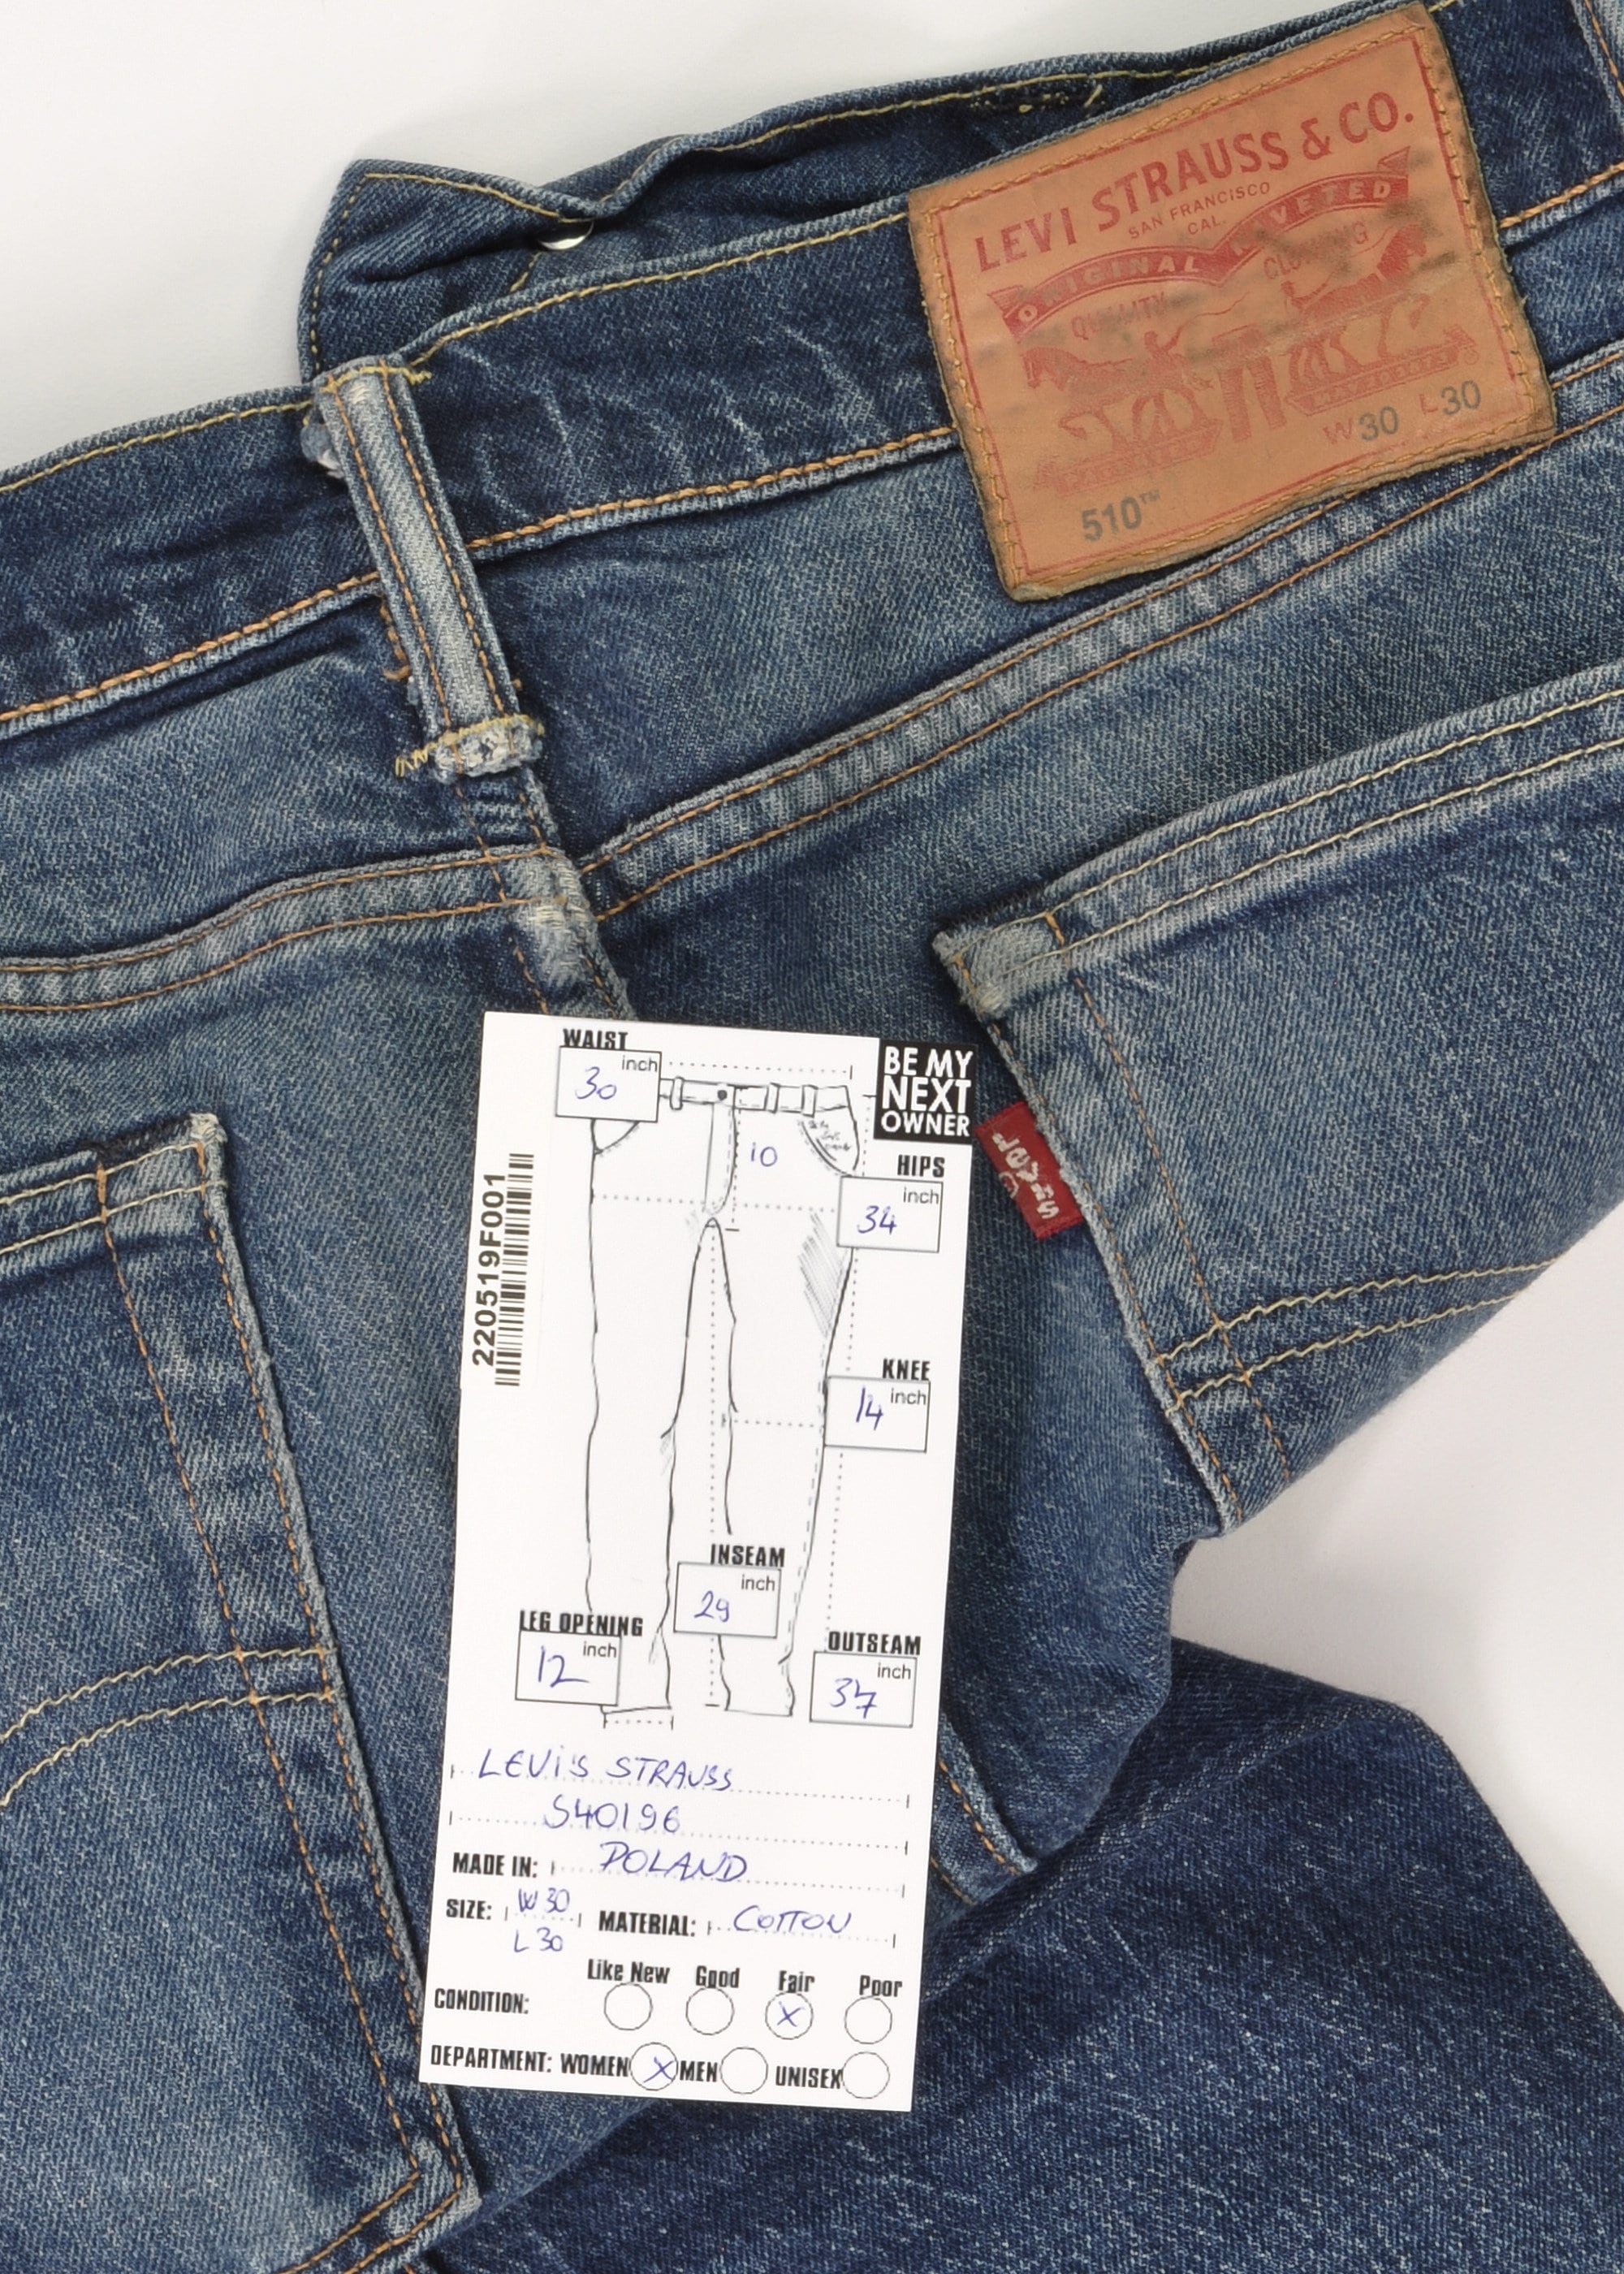 Levi's Strauss Denim S40196 Jeans for Mens W30 L30 - Etsy